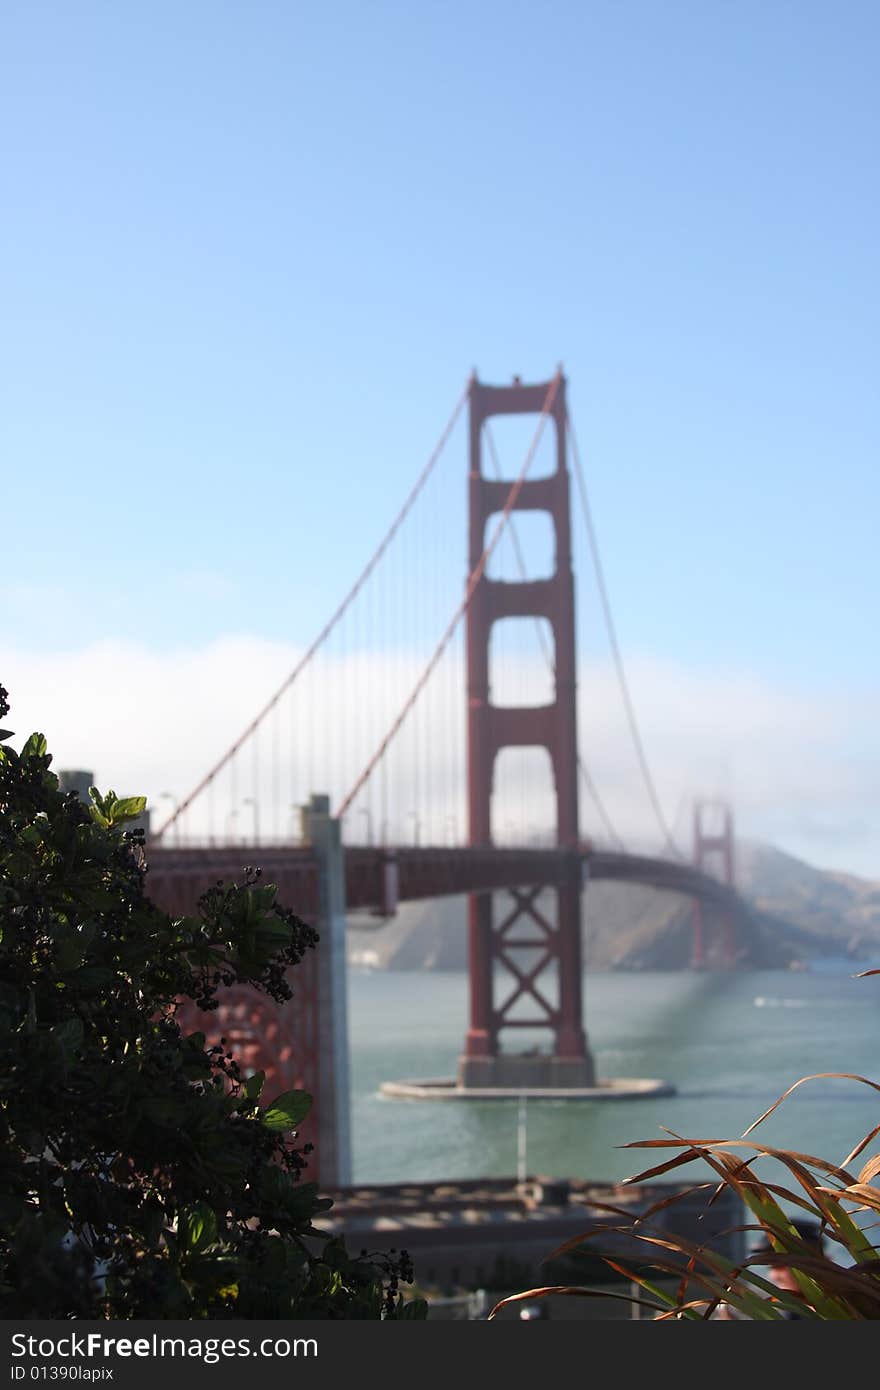 Golden Gate Bridge - San Francisco, California - focus is on the front grass